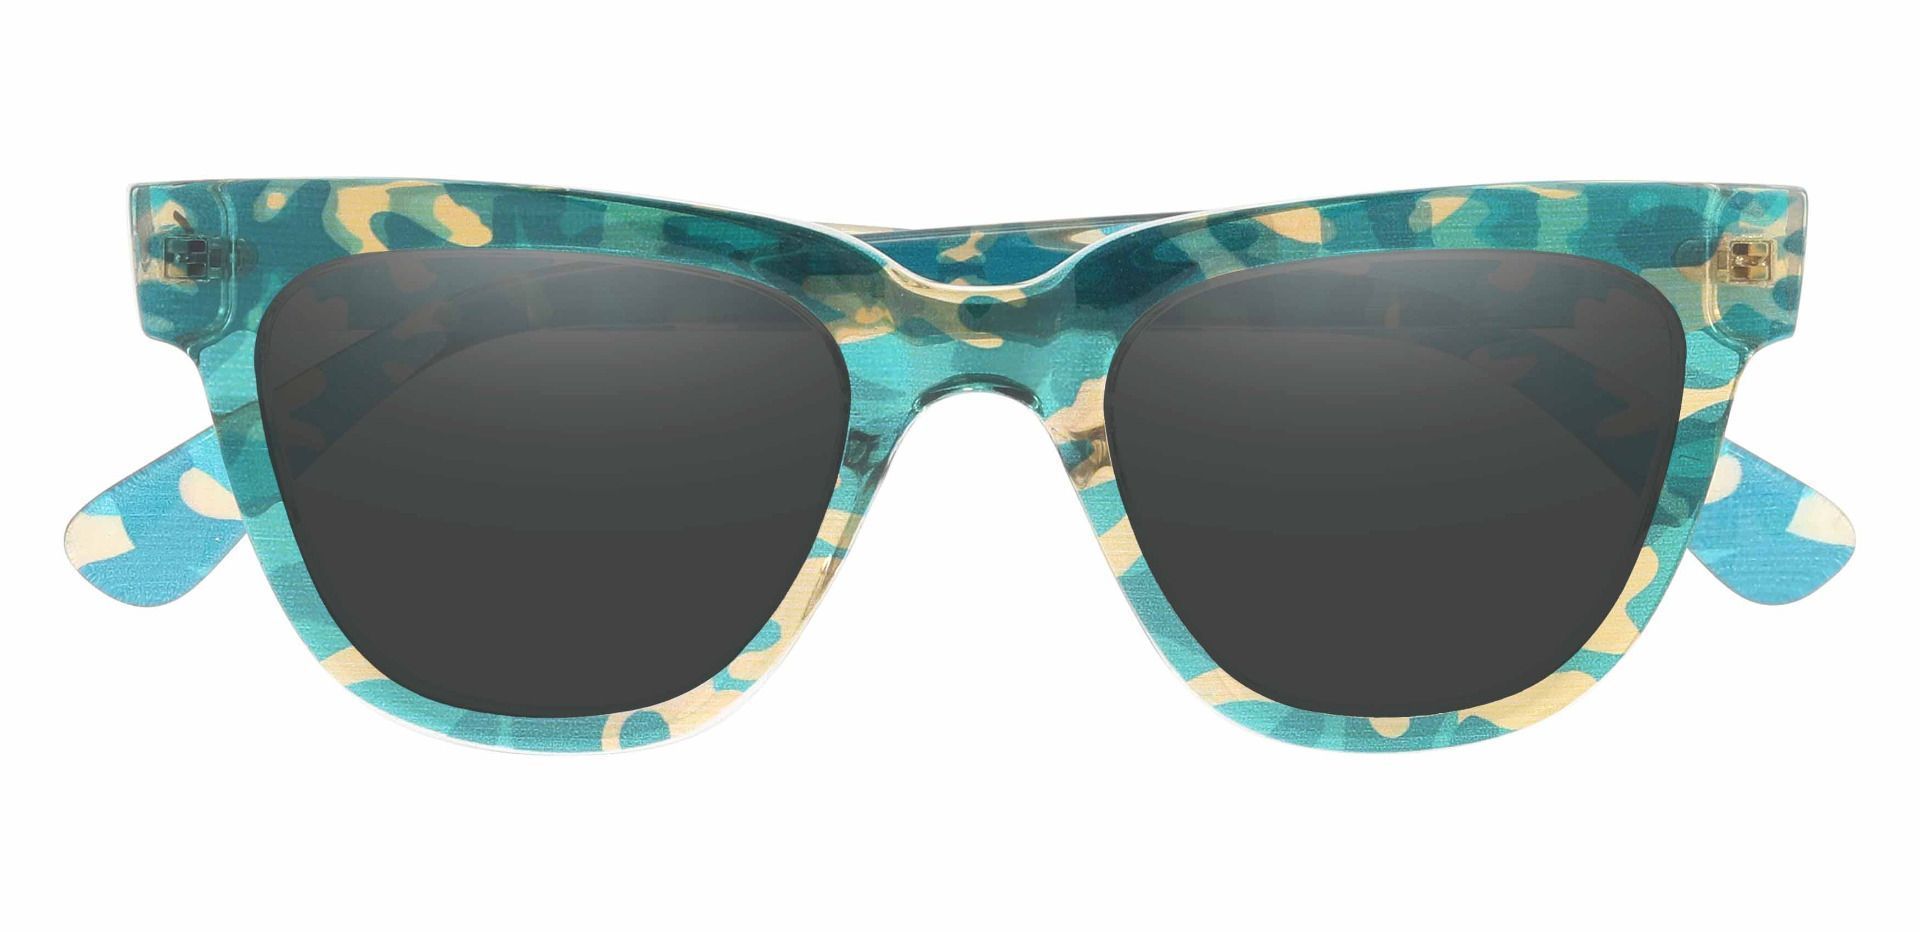 Myrtle Square Prescription Sunglasses - Green Frame With Gray Lenses